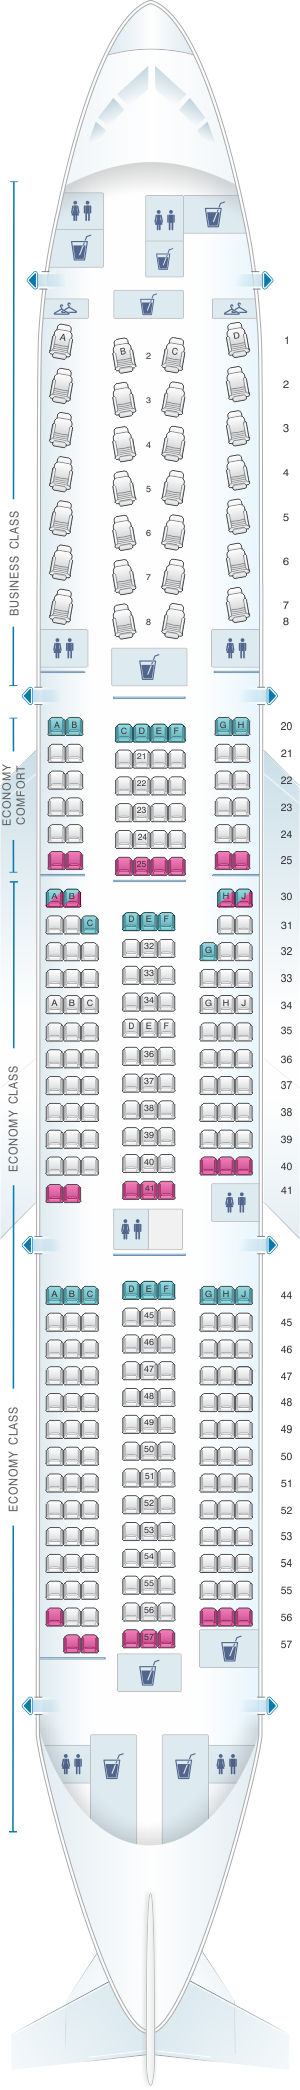 Delta Boeing 777 300ER Seating Chart